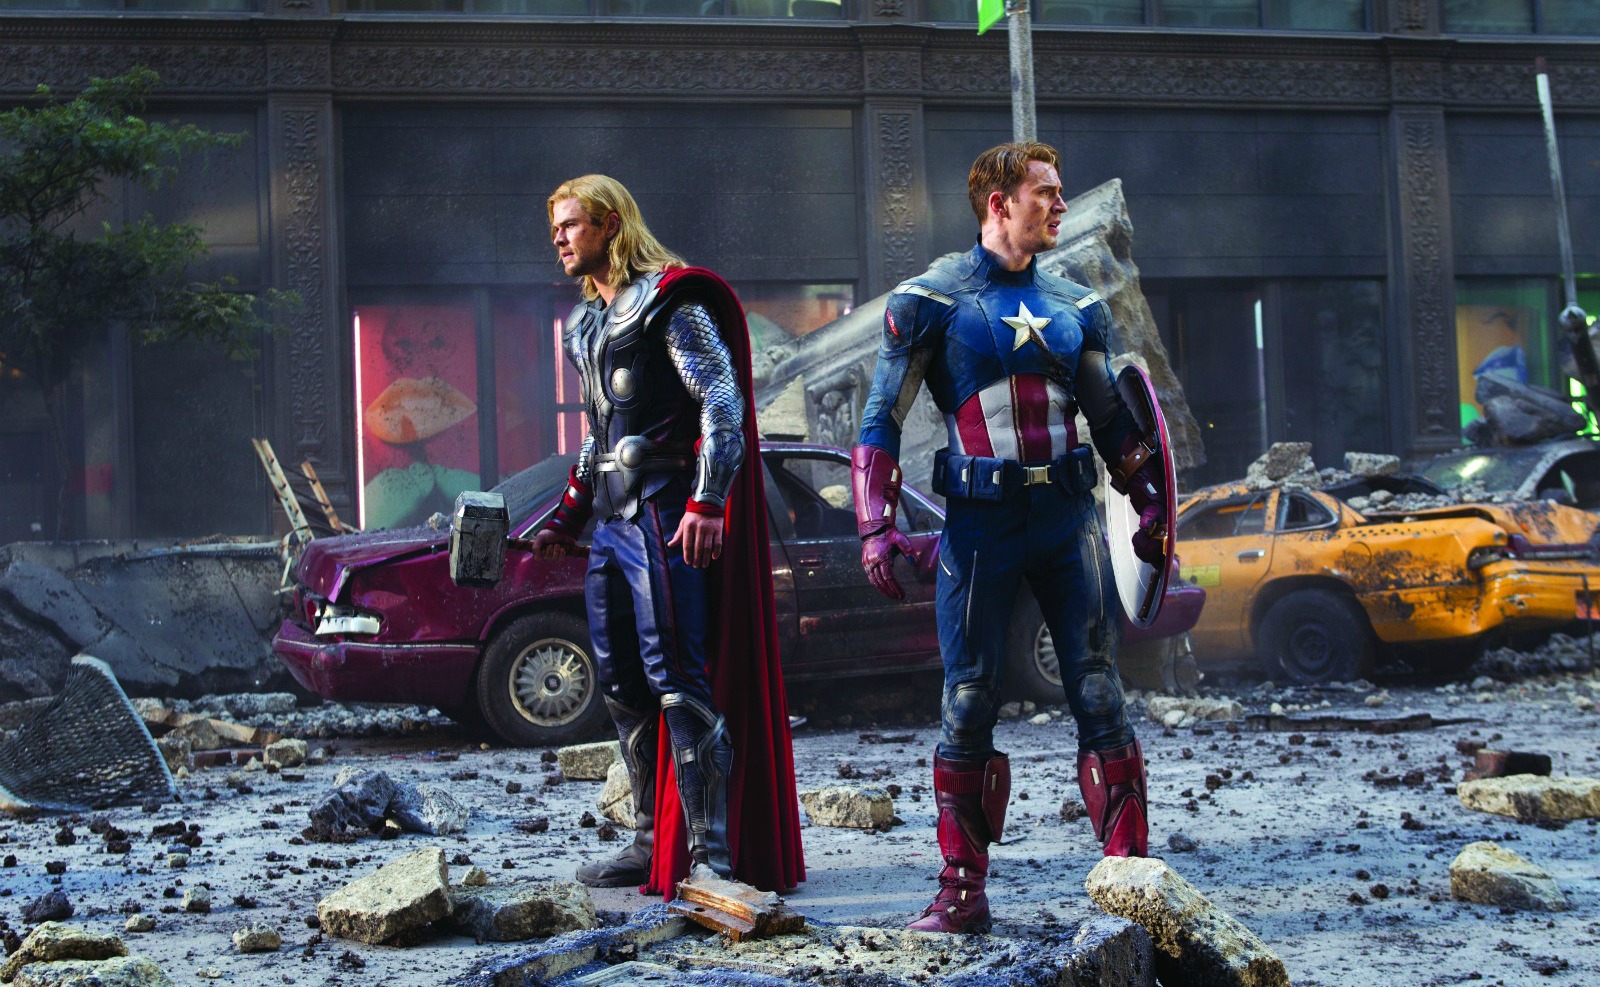 Fisico scolpito supereroi Captain America Thor segreti